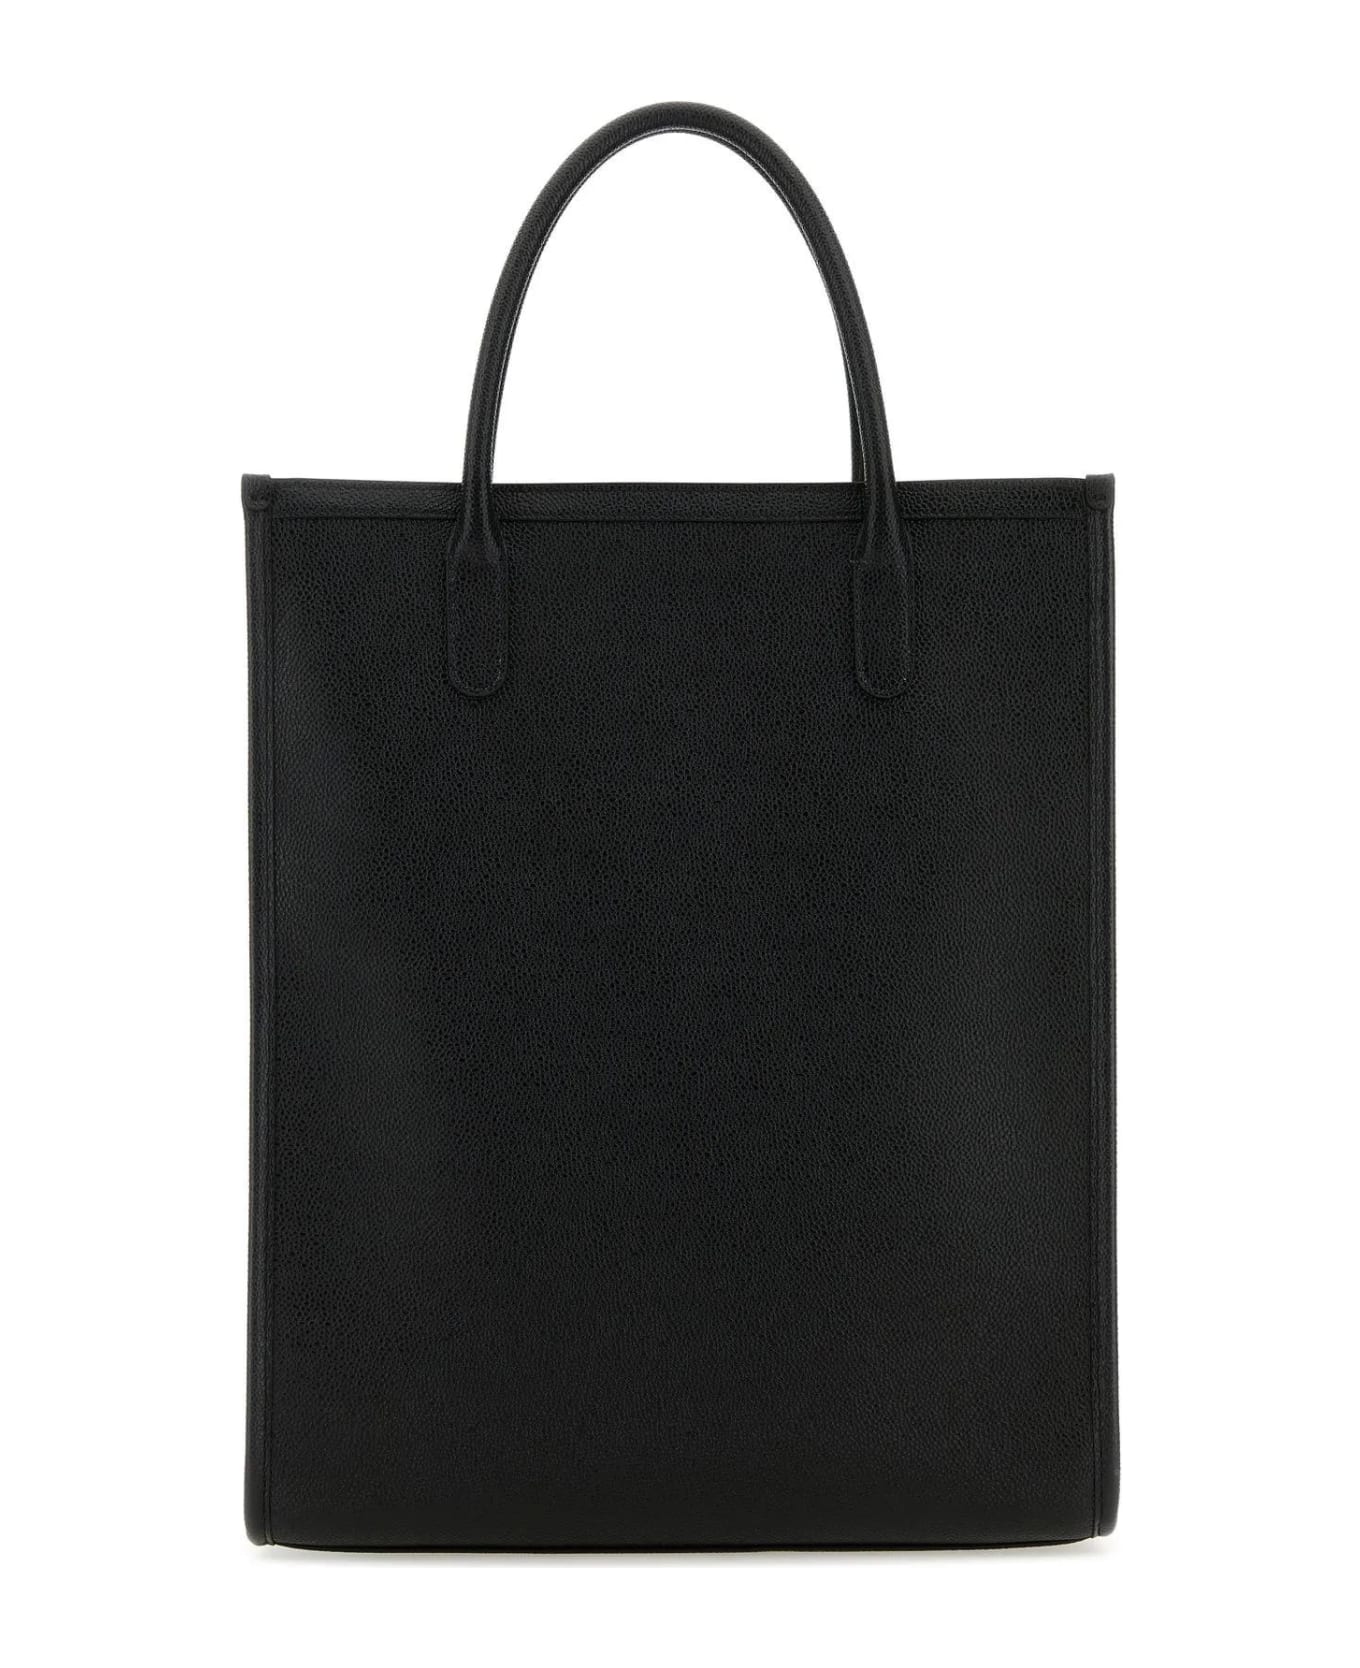 Thom Browne Black Leather Vertical Tote Handbag - Black トートバッグ